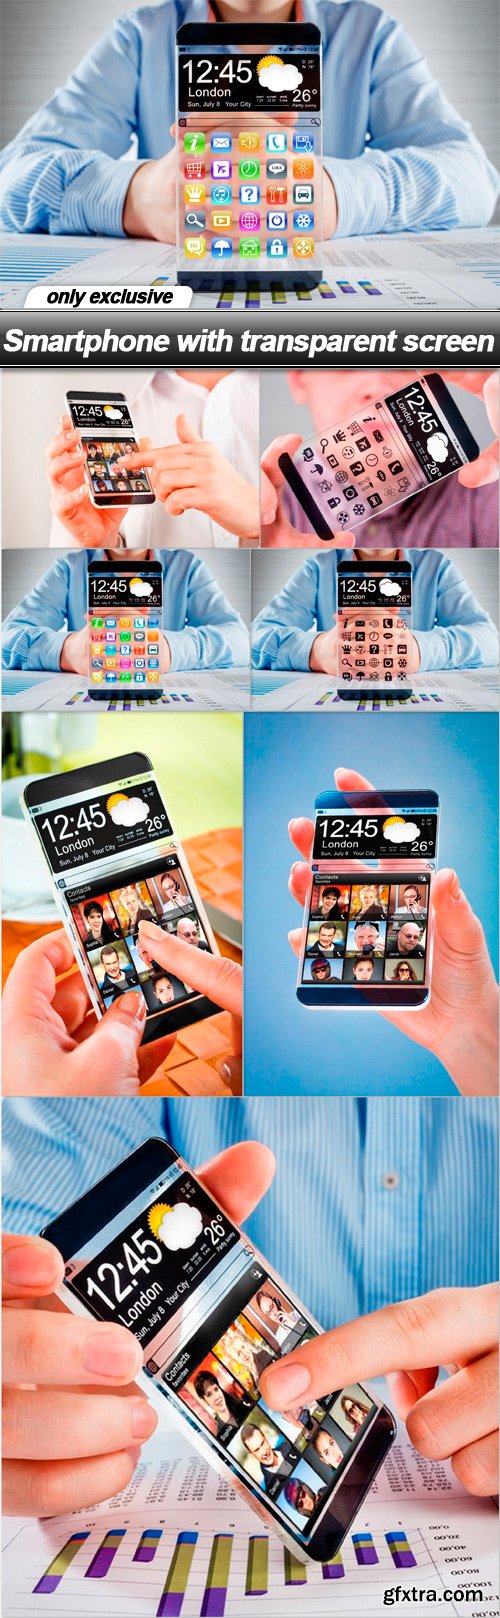 Smartphone with transparent screen - 7 UHQ JPEG